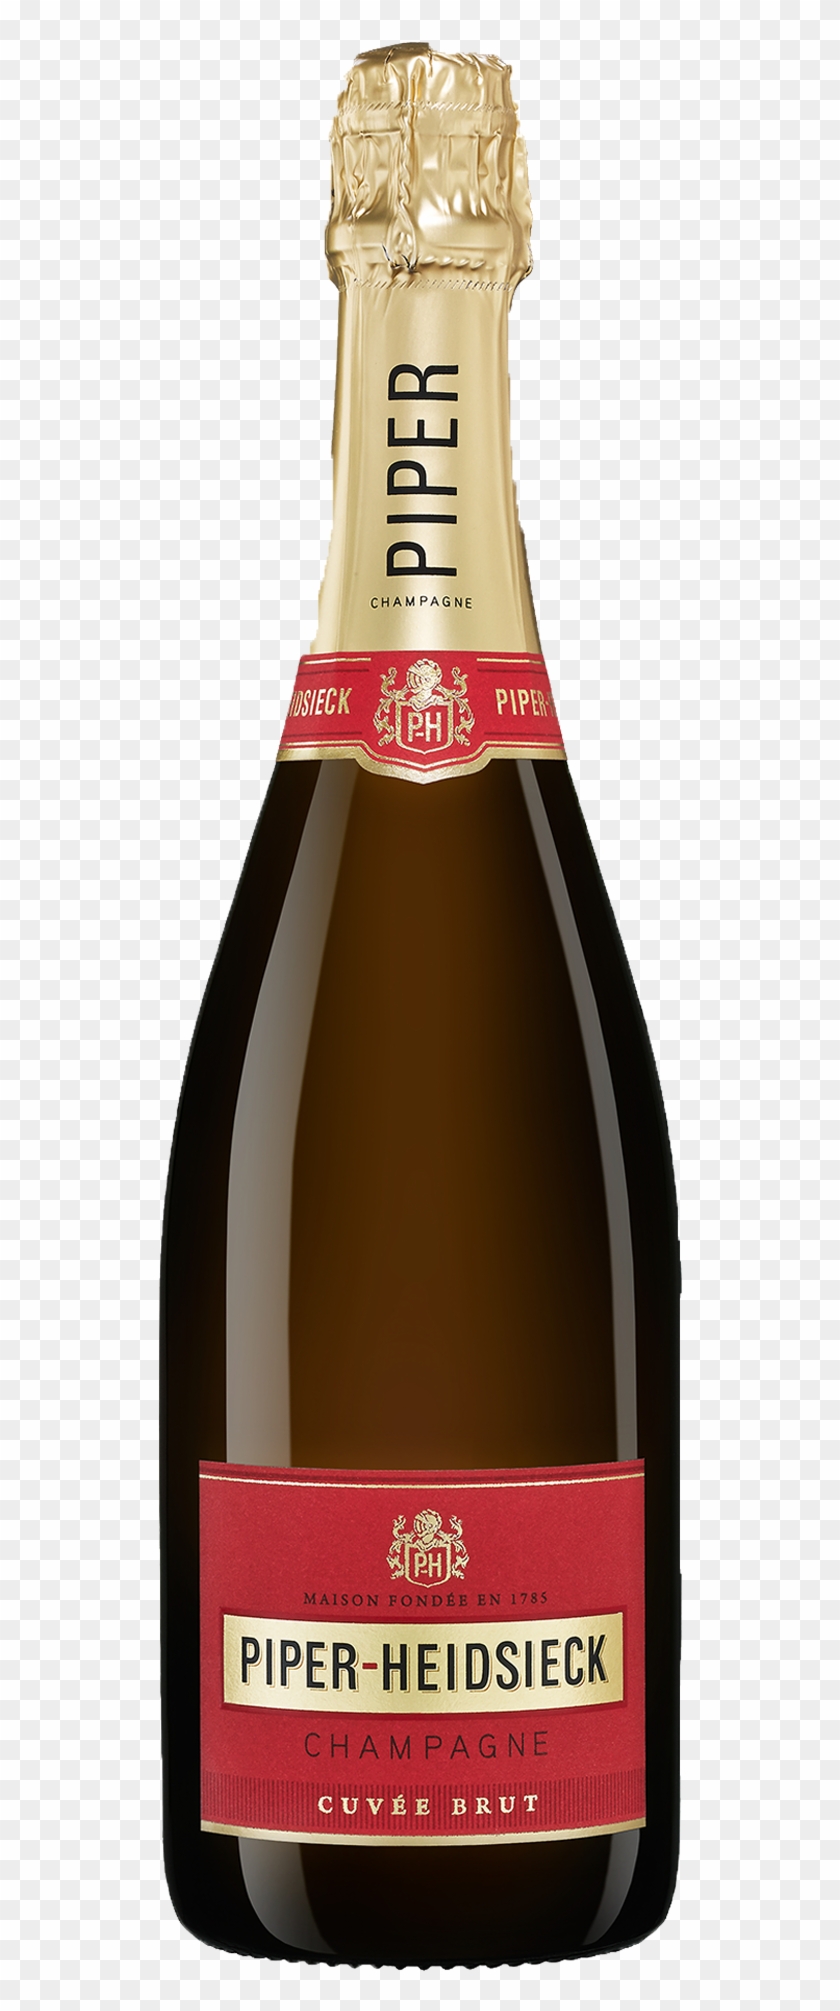 Piper-heidsieck Brut Champagne Bottle Clipart #926764